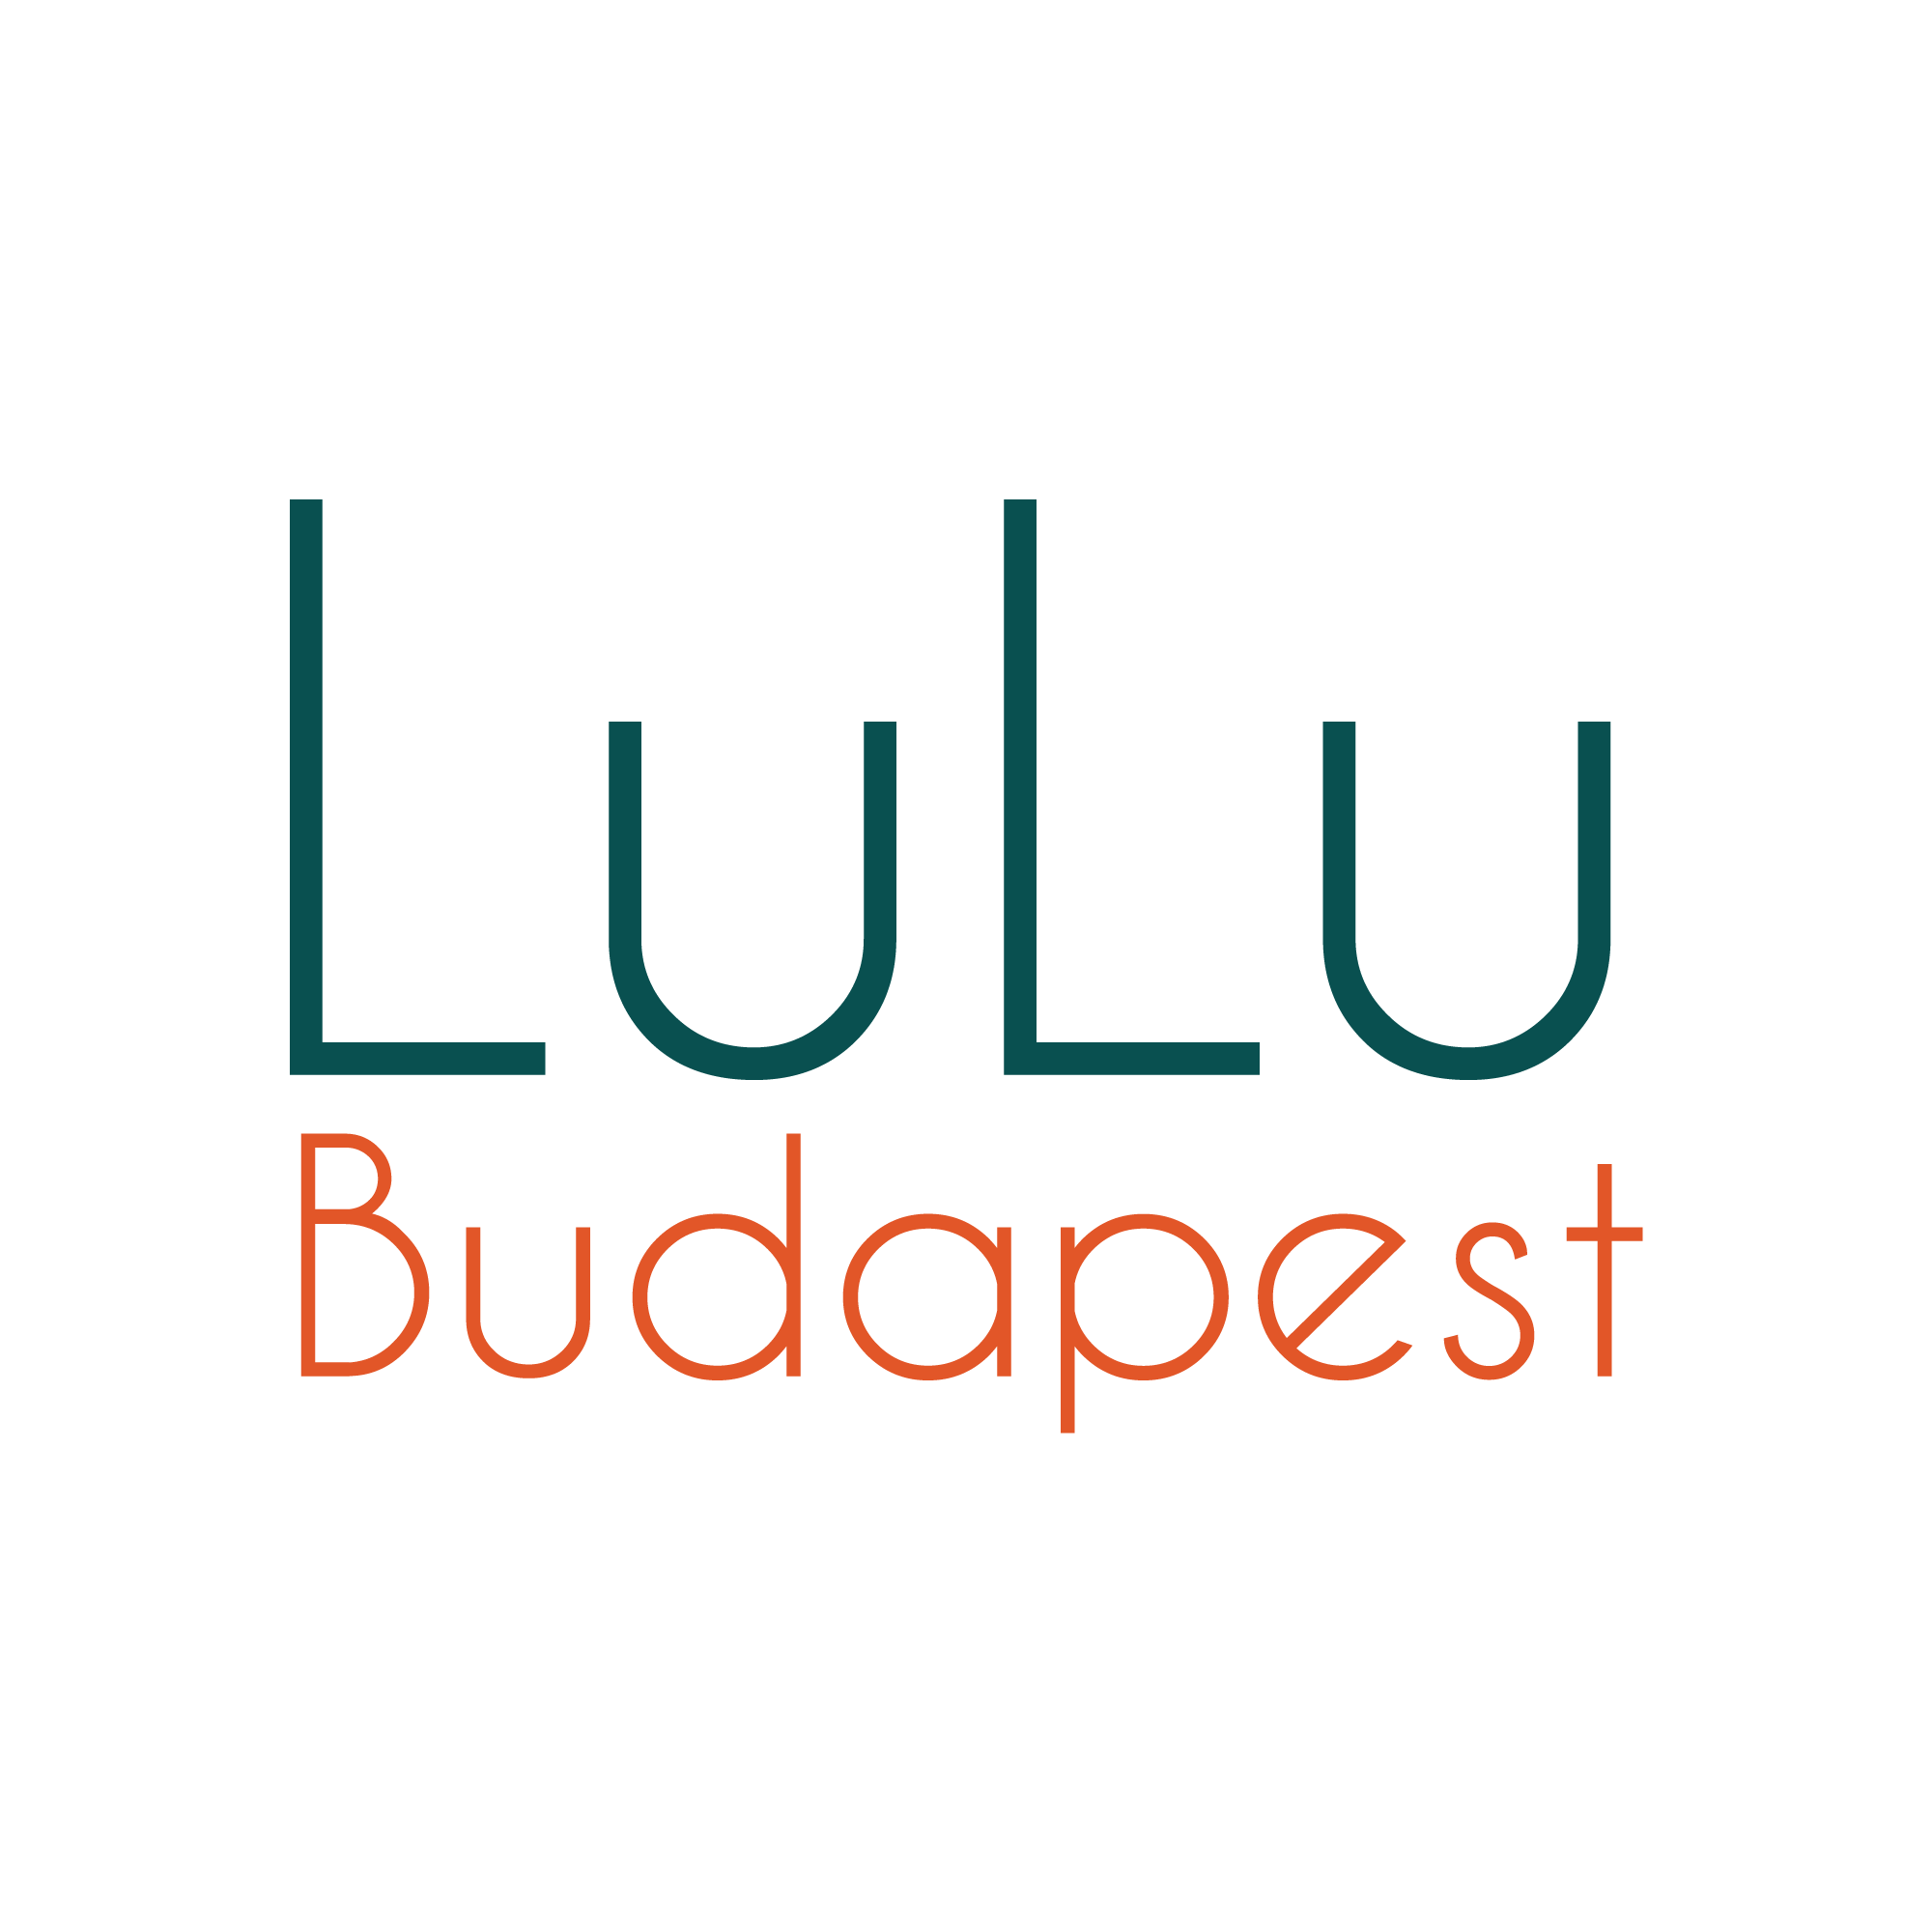 Lulu Budapest